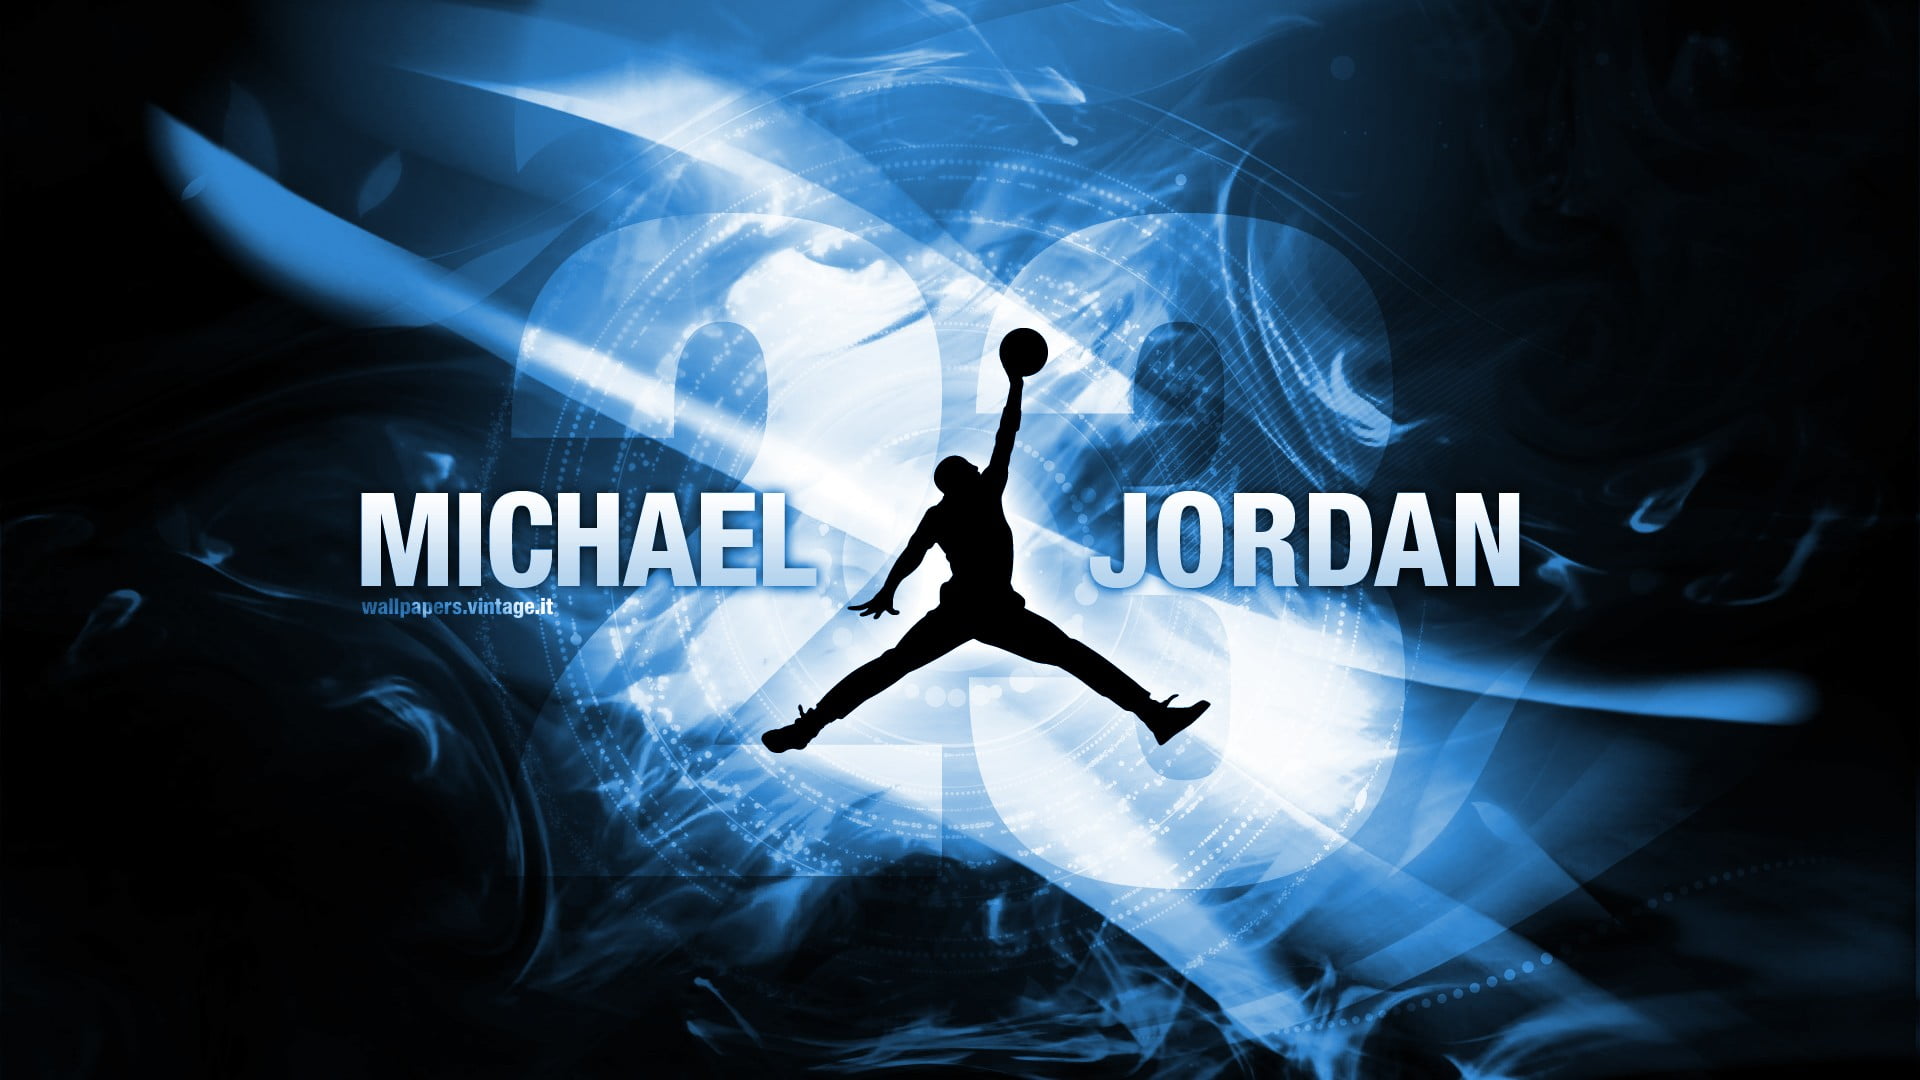 Michael Jordan 23 logo, basketball, Michael Jordan